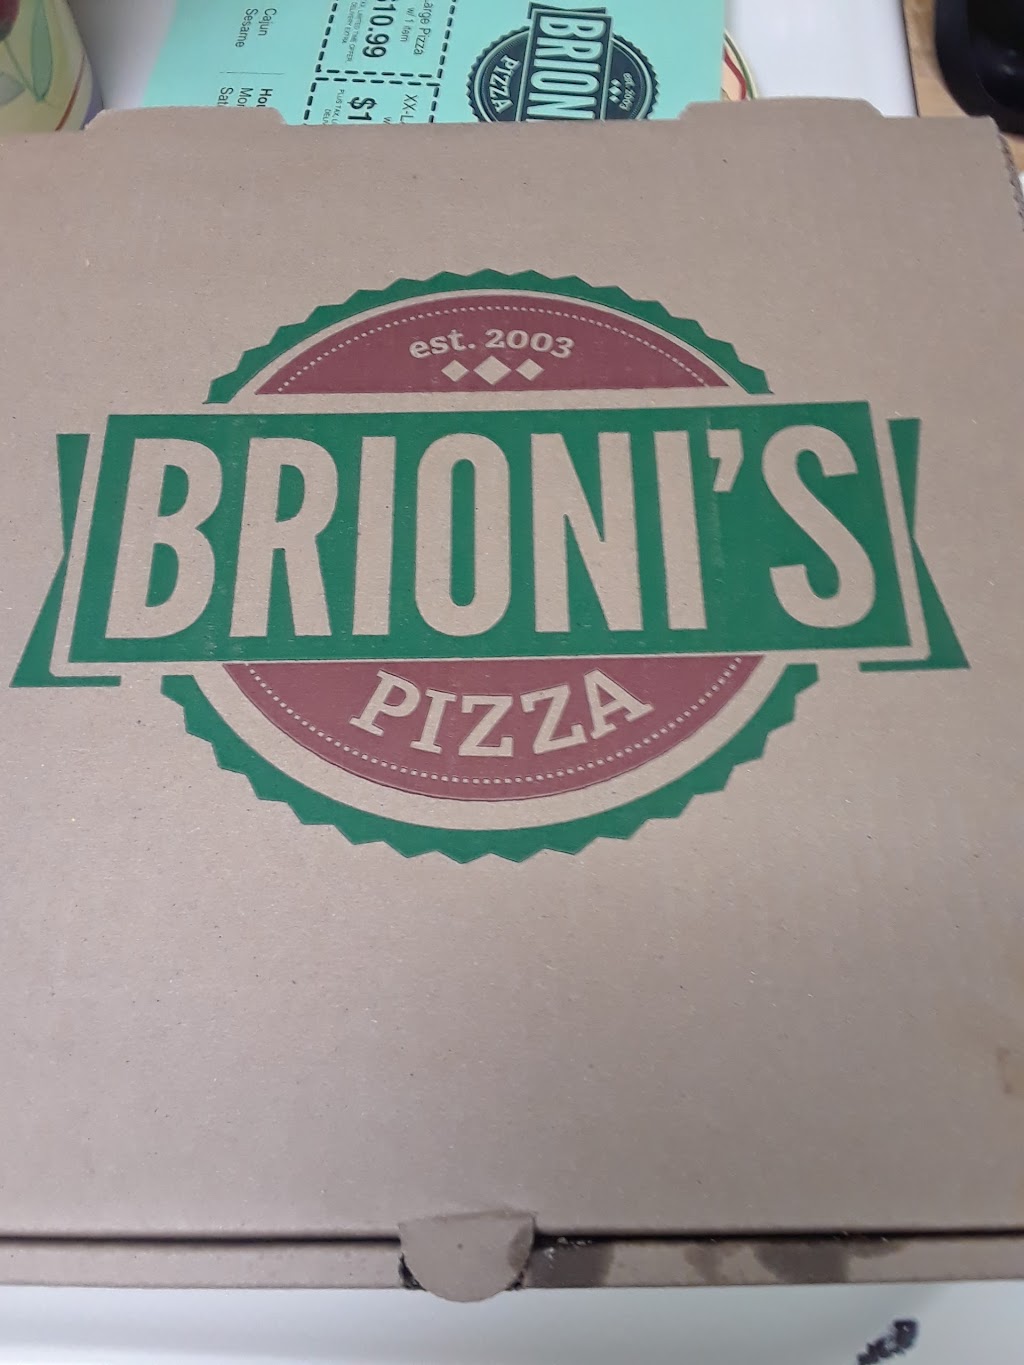 Brionis Pizza | 36643 Jefferson Ave, Harrison Twp, MI 48045, USA | Phone: (586) 468-0700